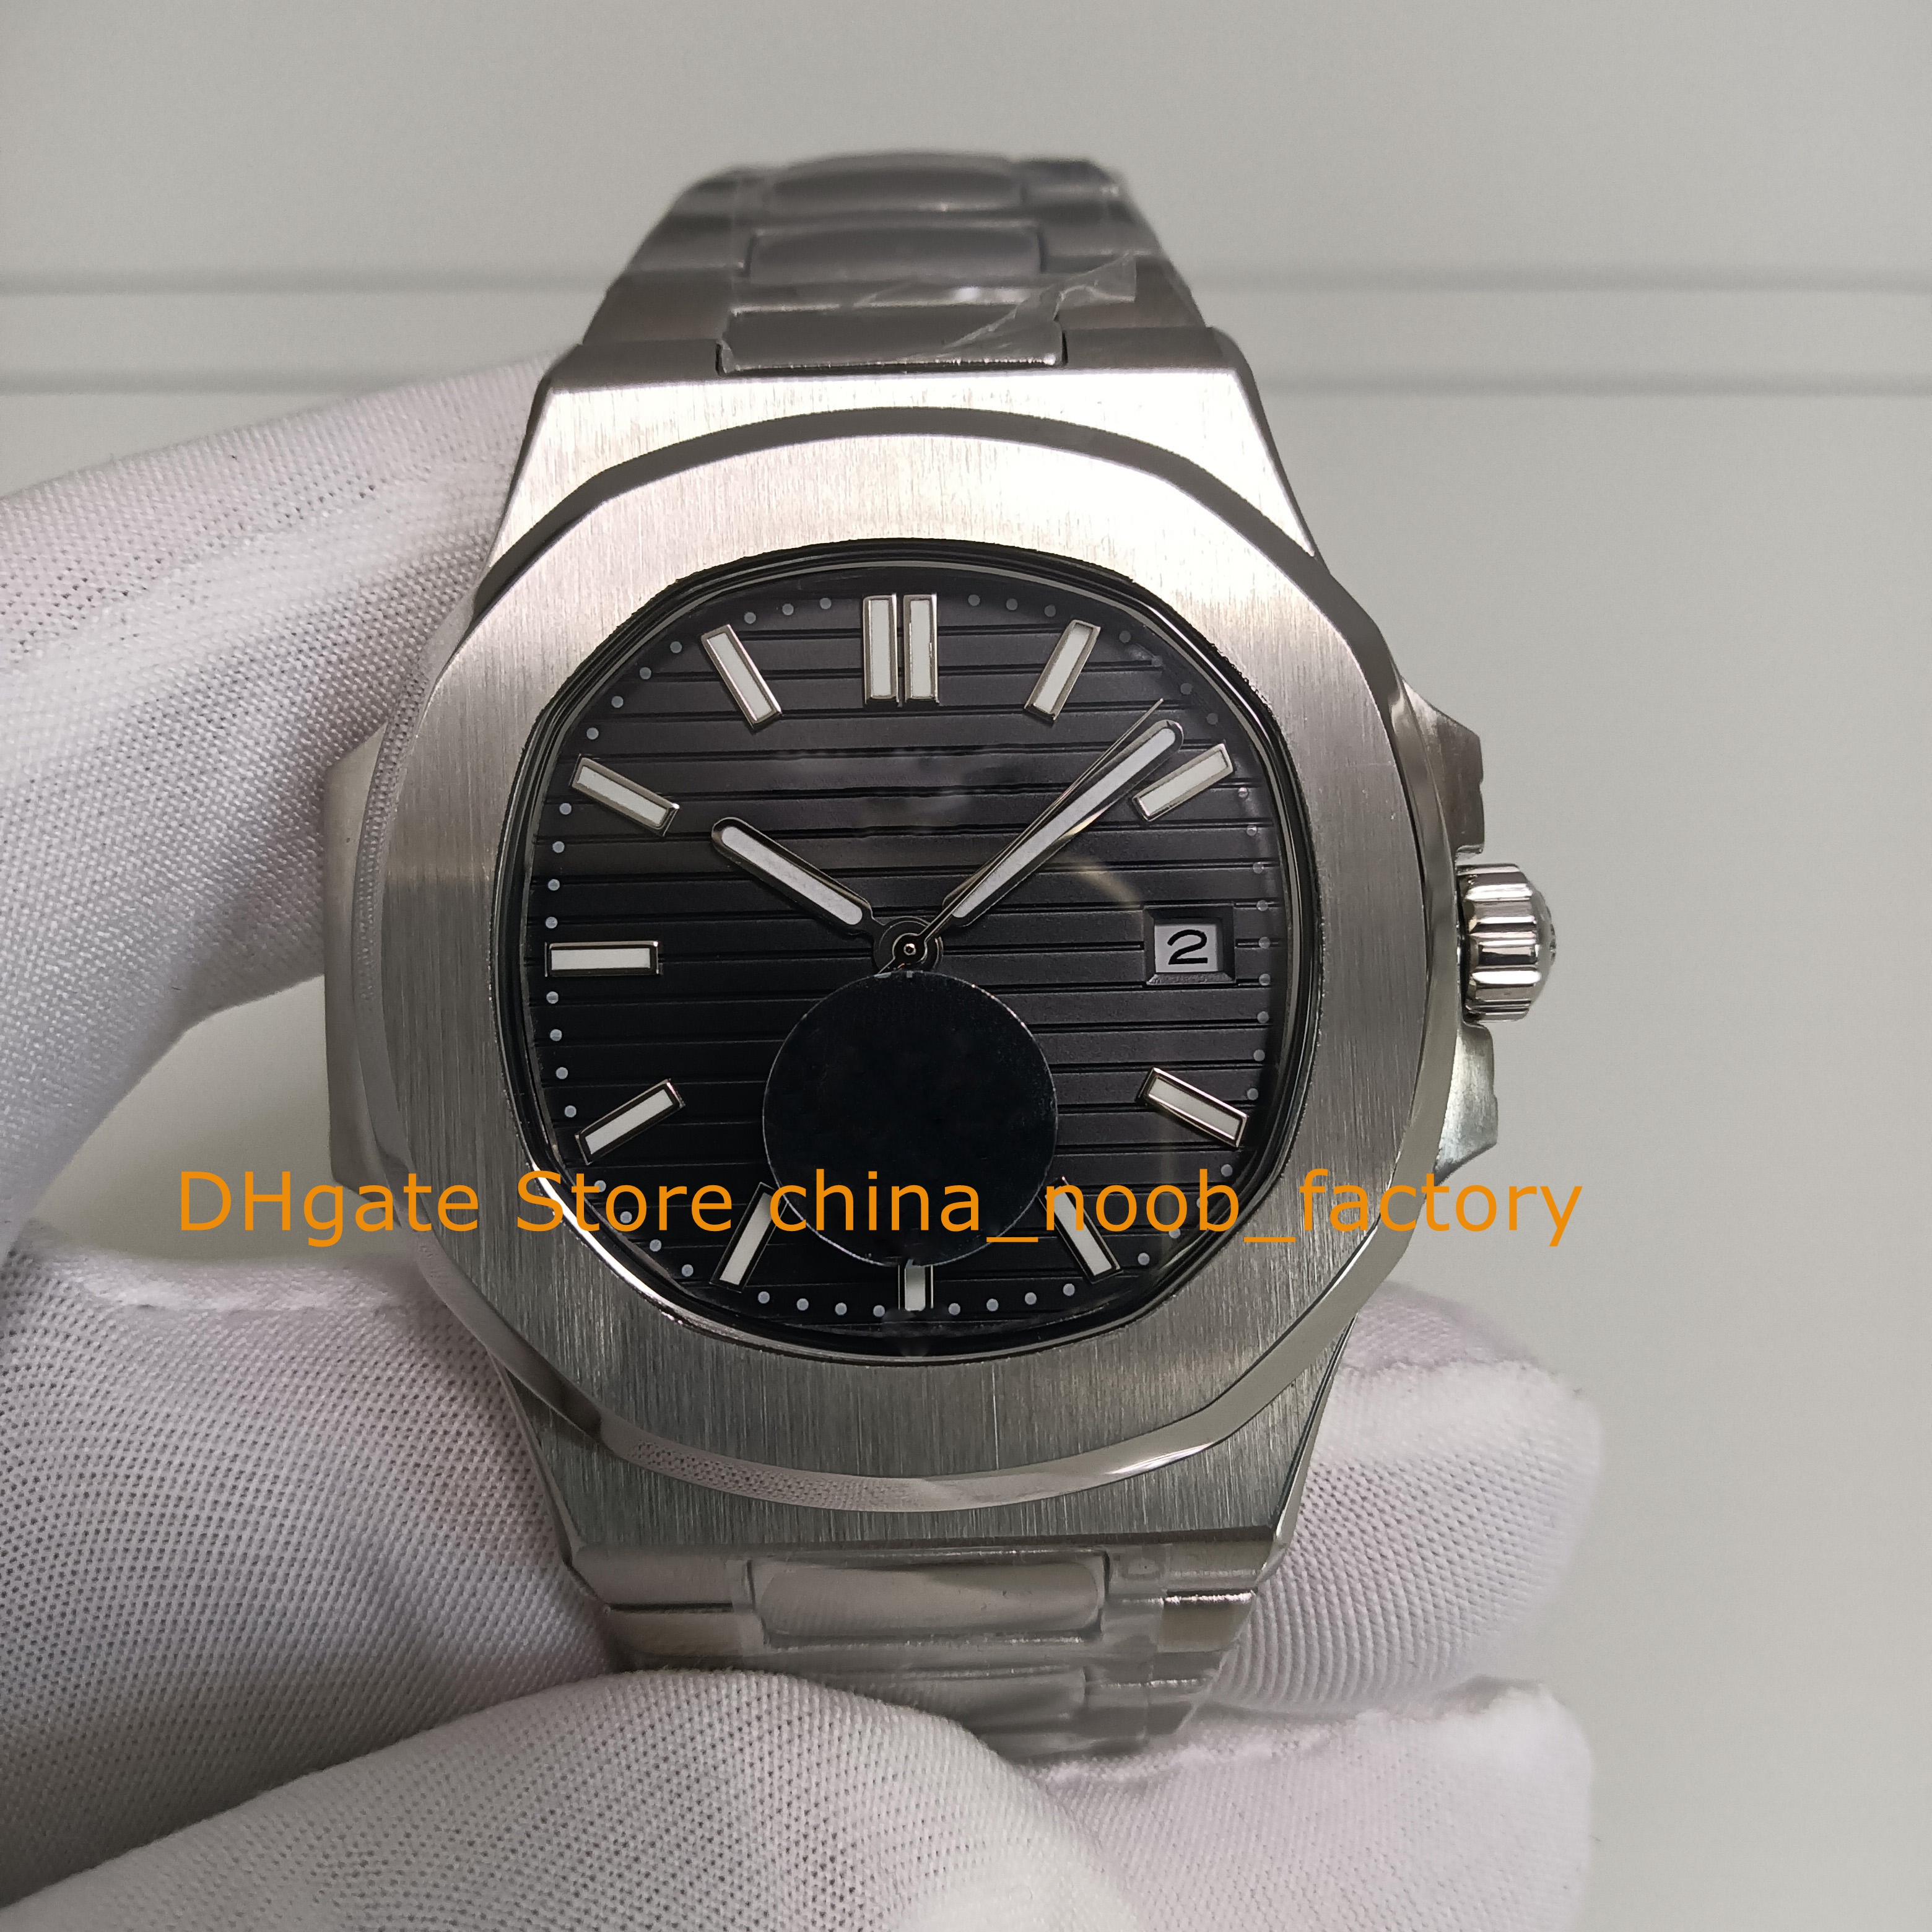 5 f￤rg automatisk klocka f￶r mens 40mm 5711 Datum svartvit bl￥tt gr￶nt rostfritt st￥l armband transparent rygg Asien kal.324 s c mekaniska klockor armbandsur